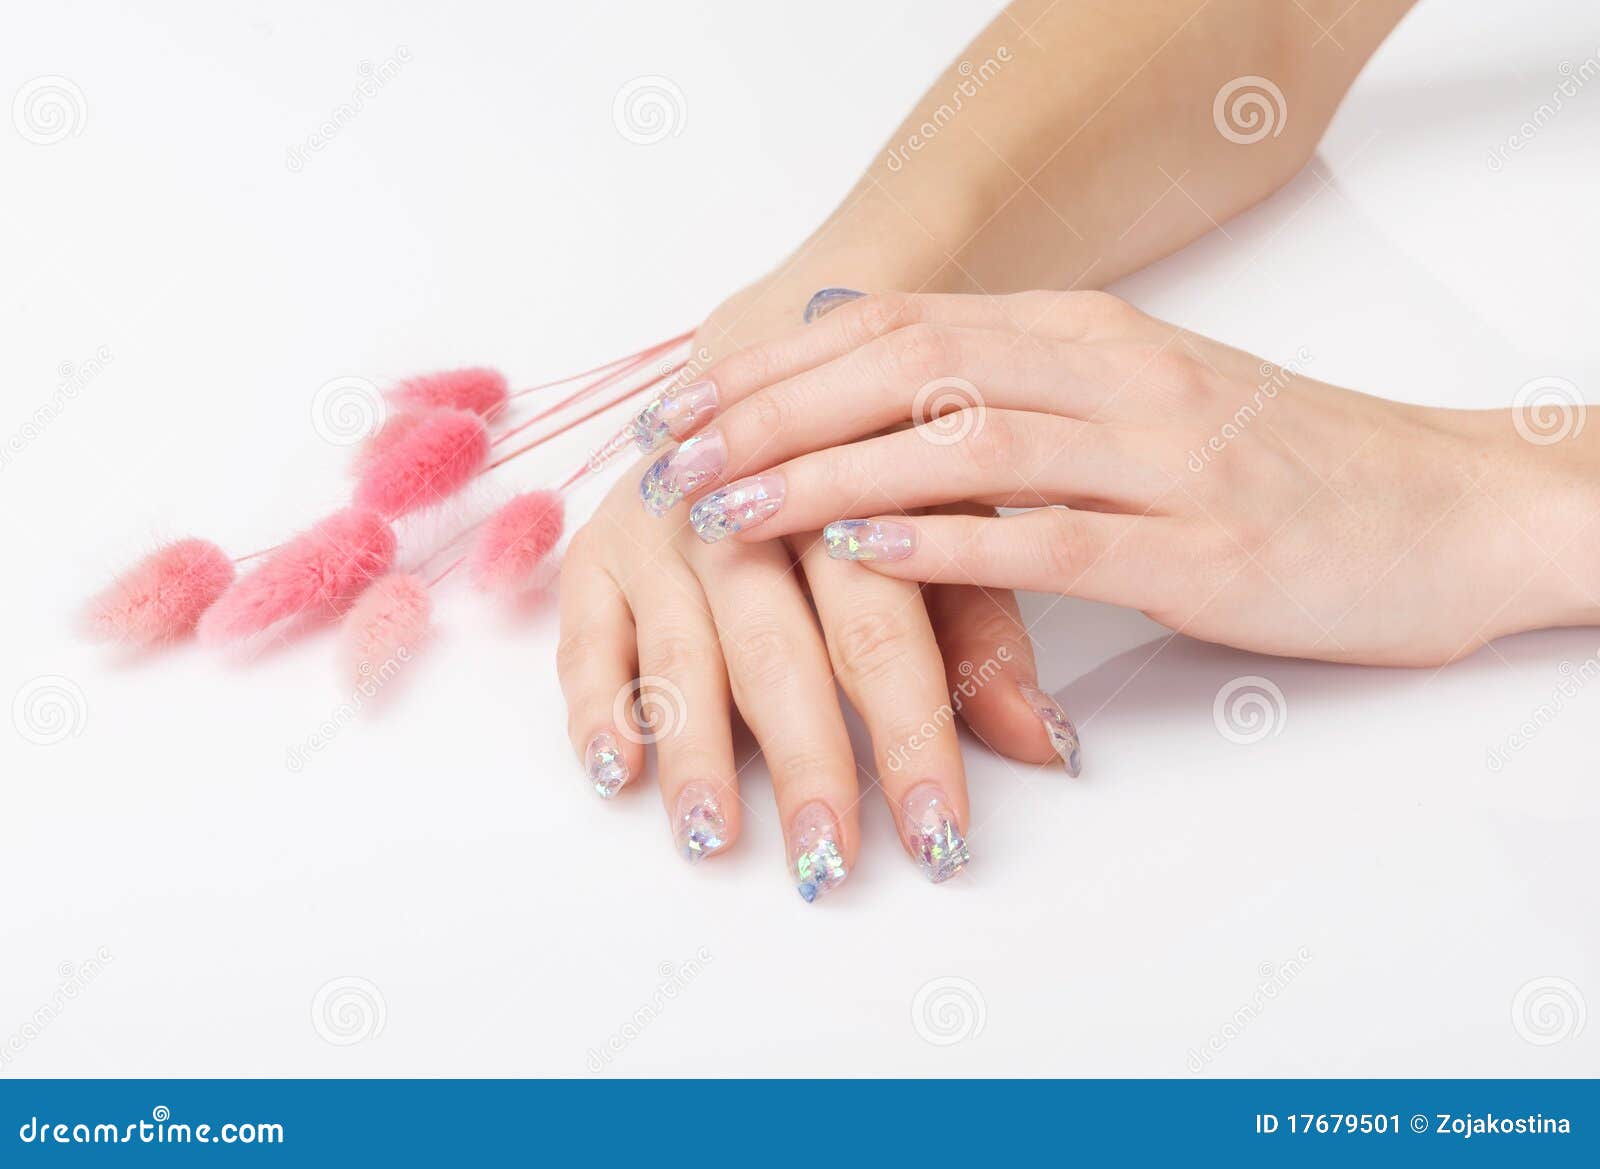 manicure with crystalline flecks